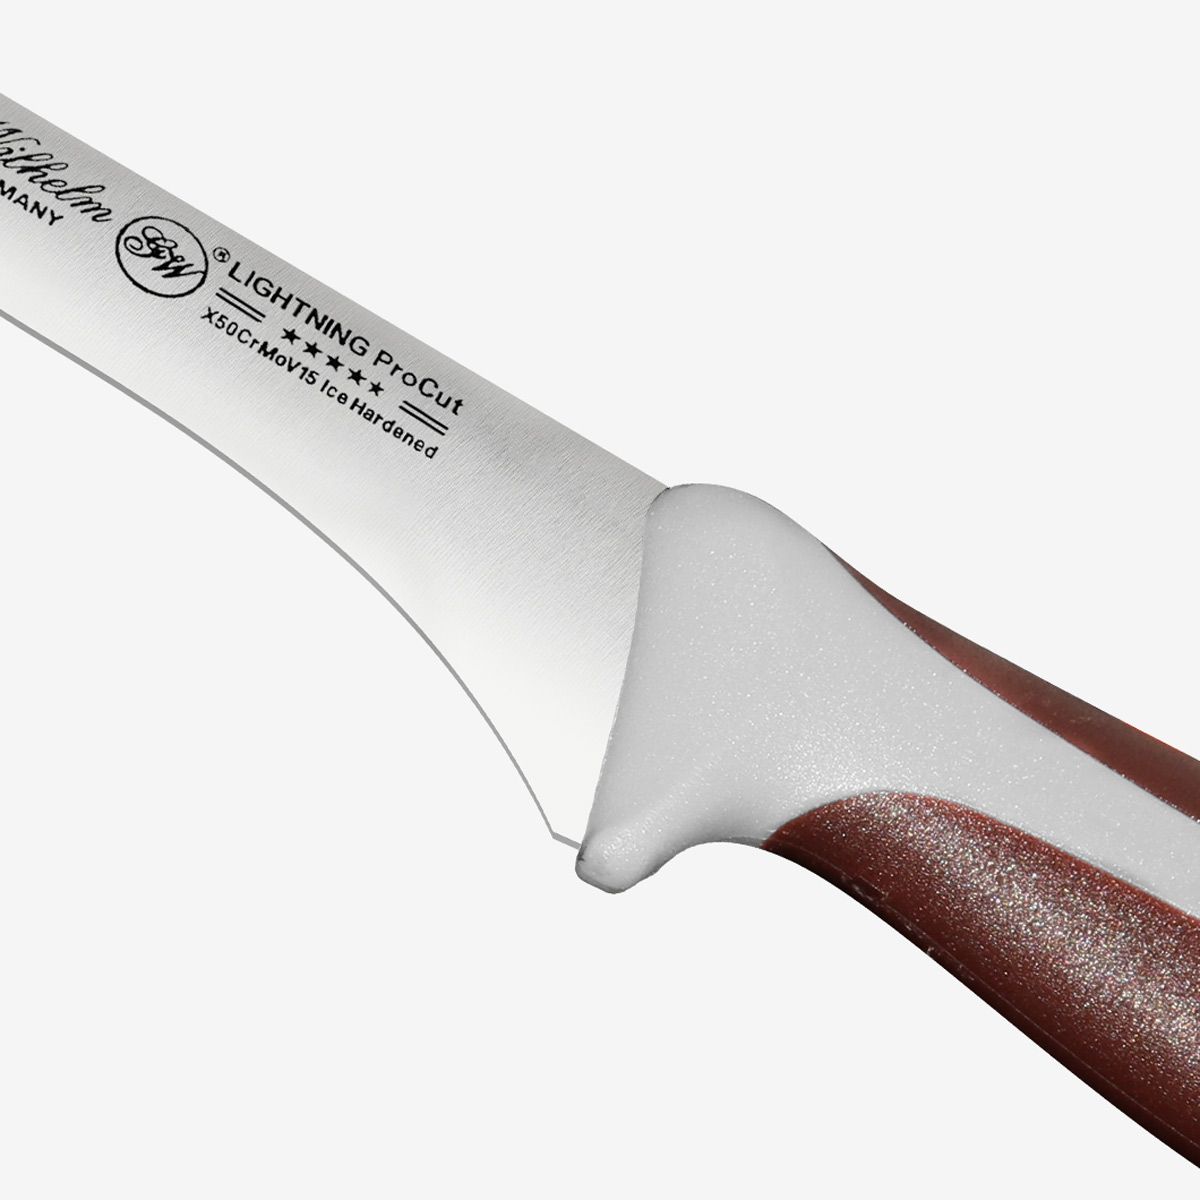 Gunter Wilhelm Thunder Boning Knife, 6 Inch | Brown and Grey ABS Handle SKU: 10-114-0306